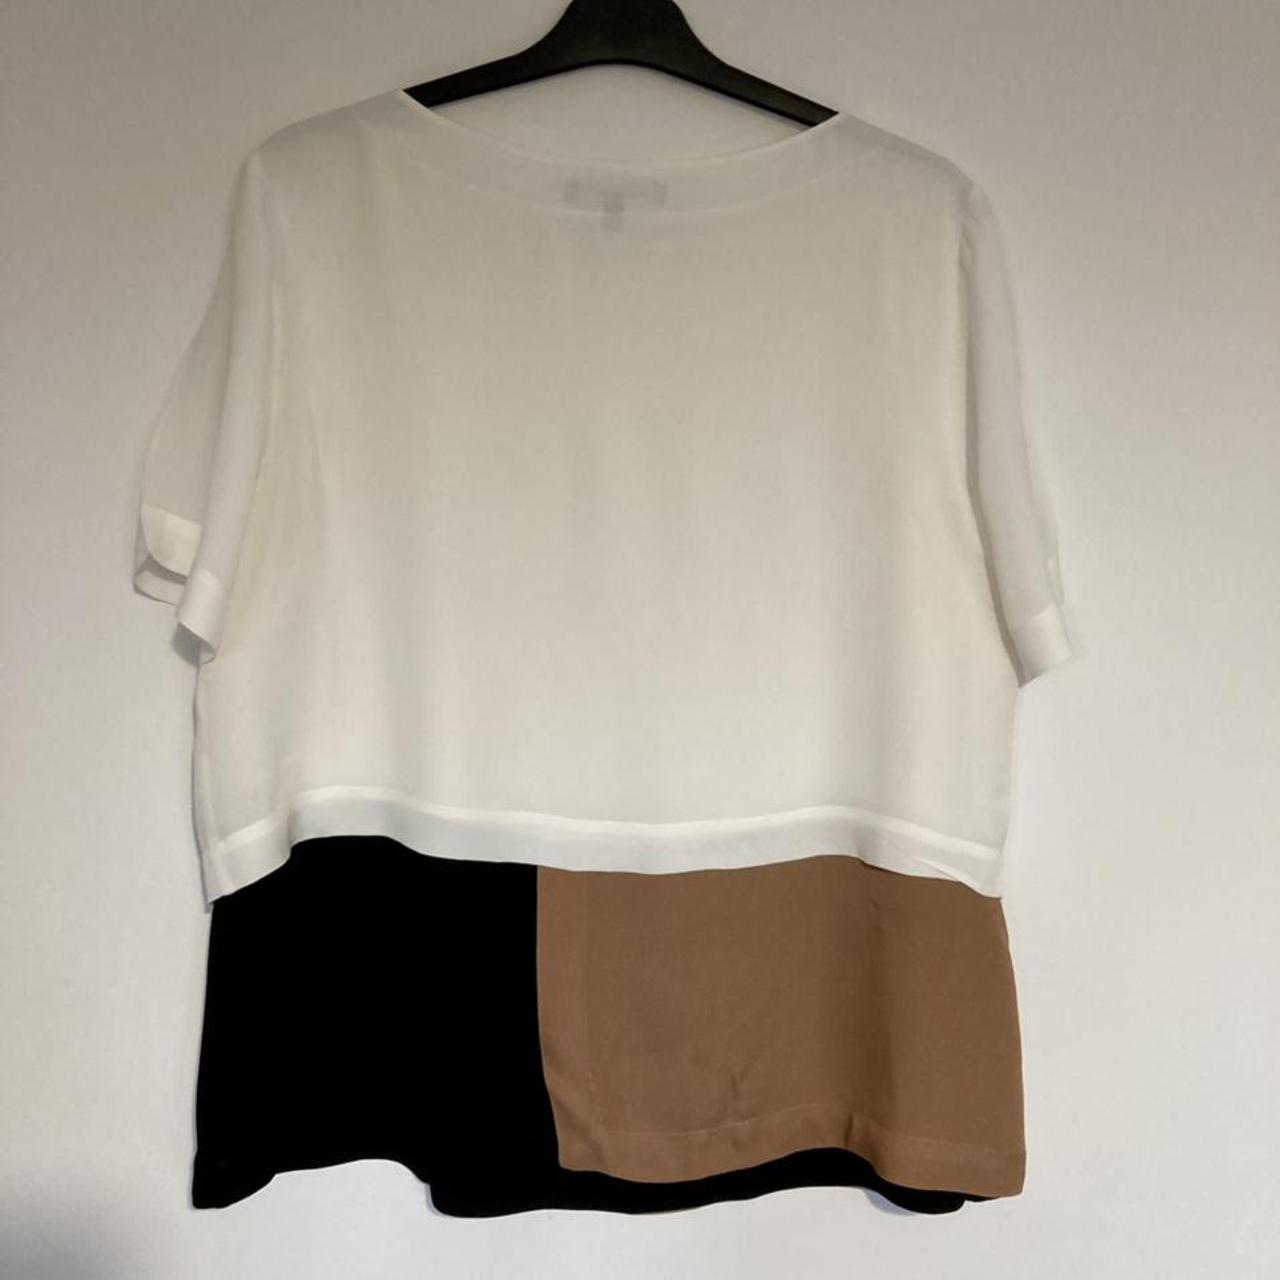 Product Image 2 - Sheer layered Laura Ashley shirt/blouse.